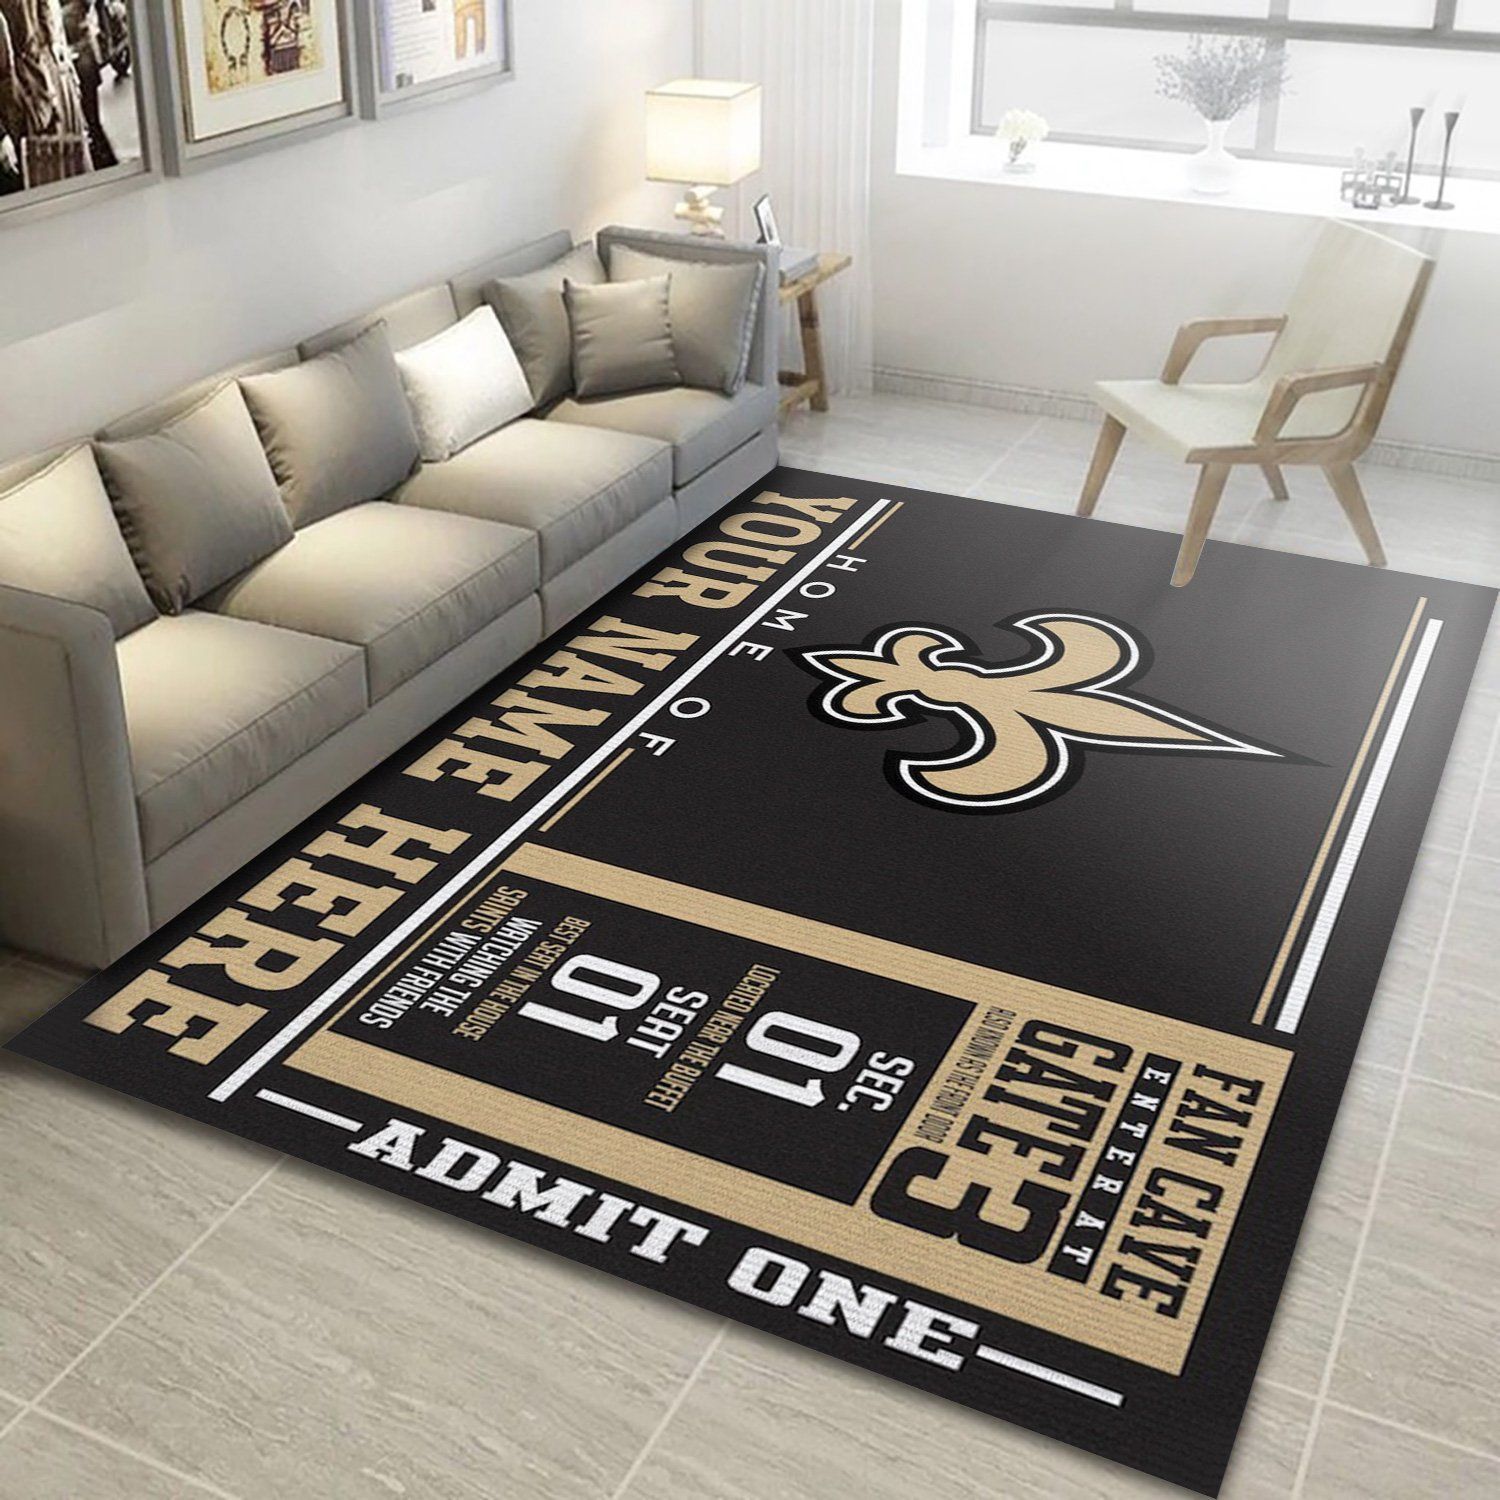 NFL Football team New Orleans Saints Home Customizable Floor home decoration carpet rug